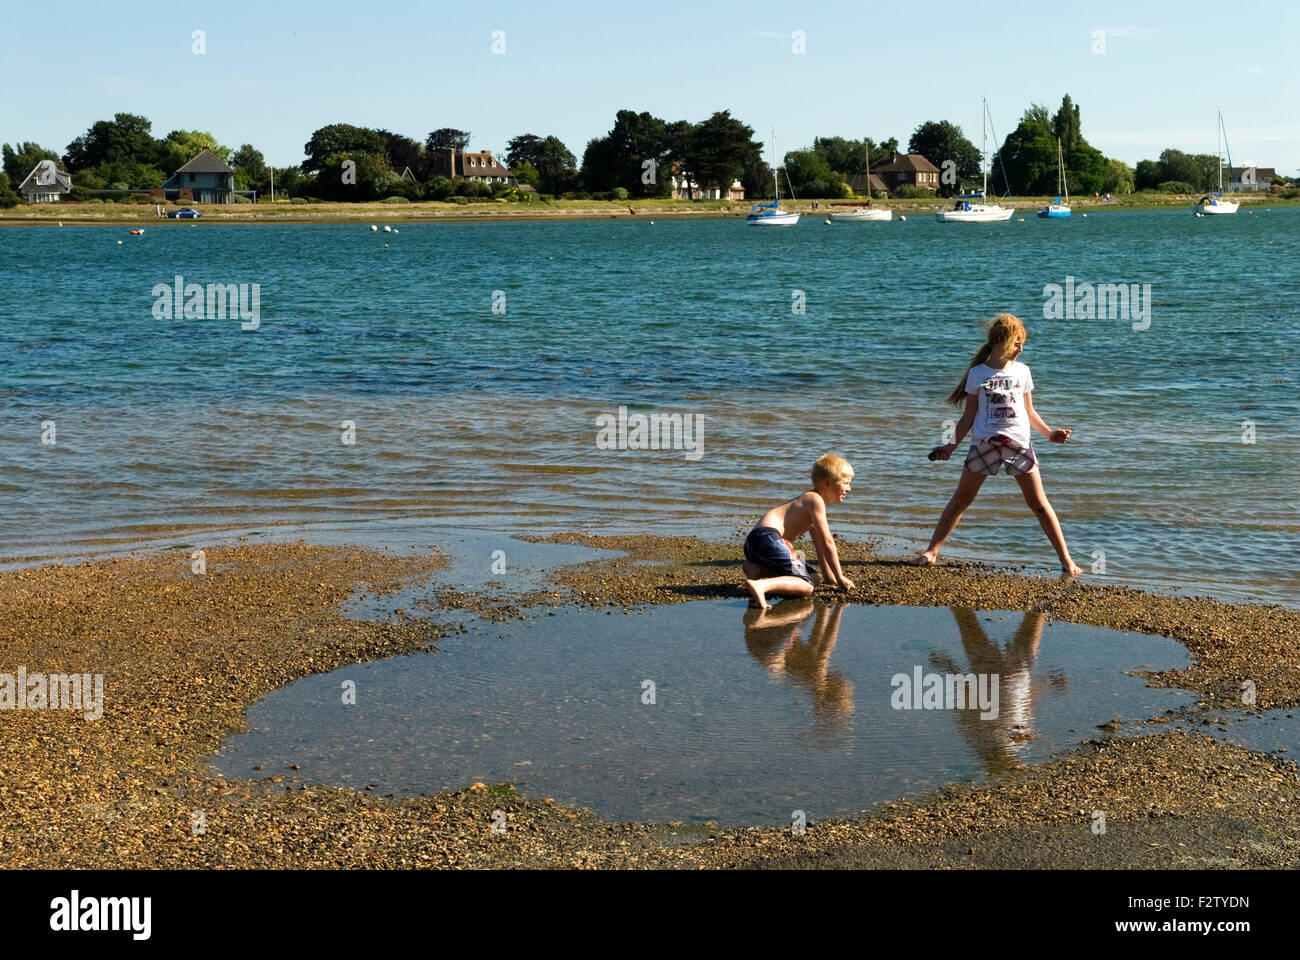 Bosham quay, kids brother sister playing together. England UK 2010s 2015 HOMER SYKES Stock Photo